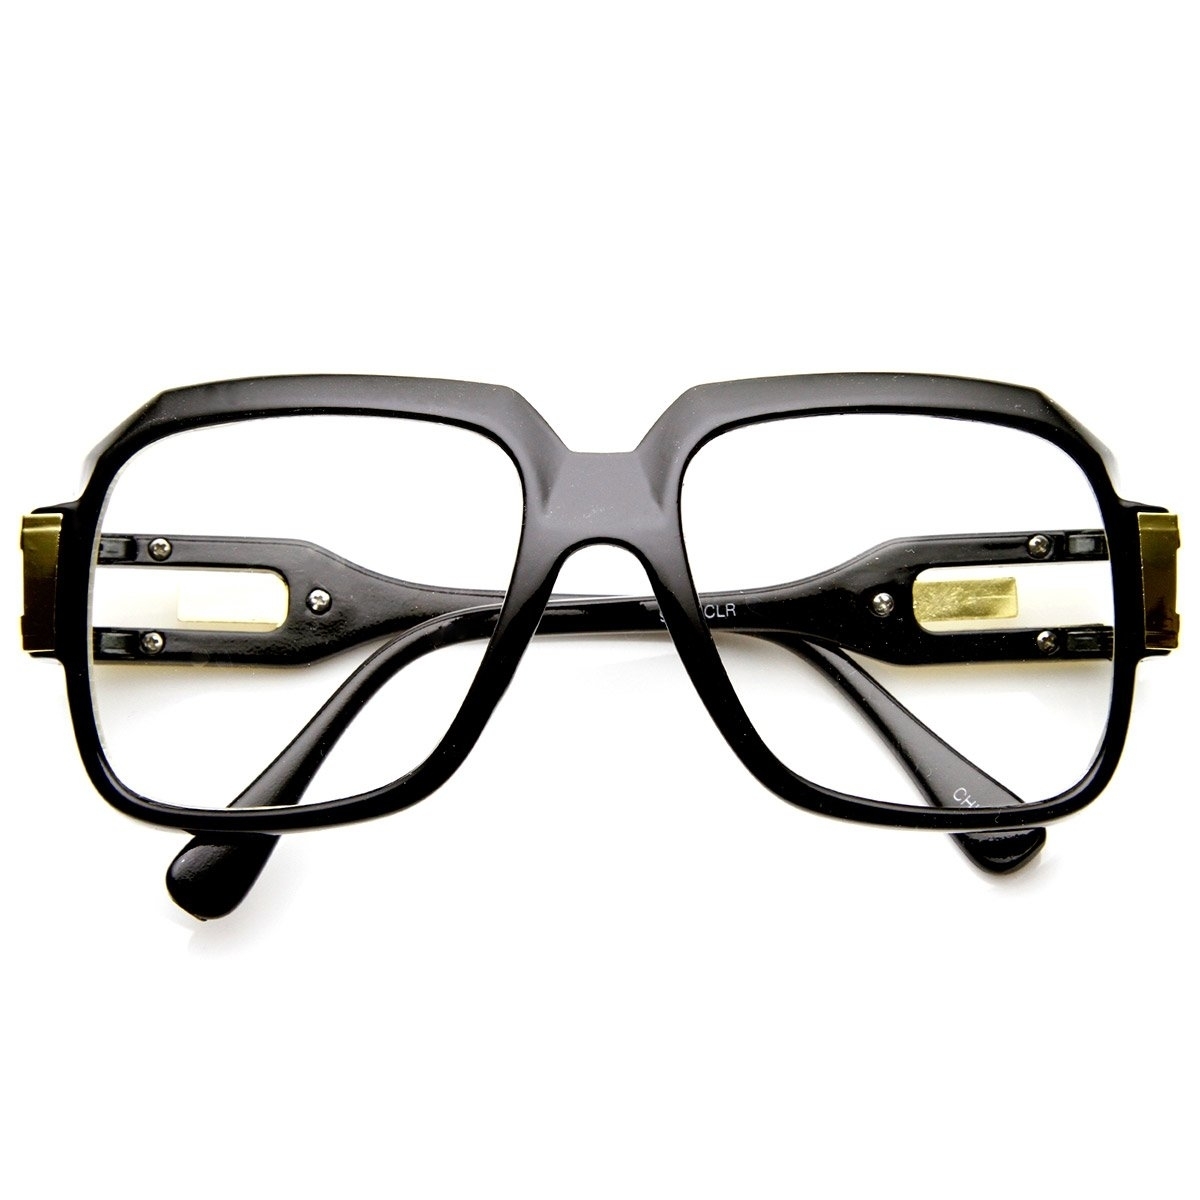 Large Classic Retro Square Frame Hip Hop Clear Lens Glasses - Shiny Black-Gold